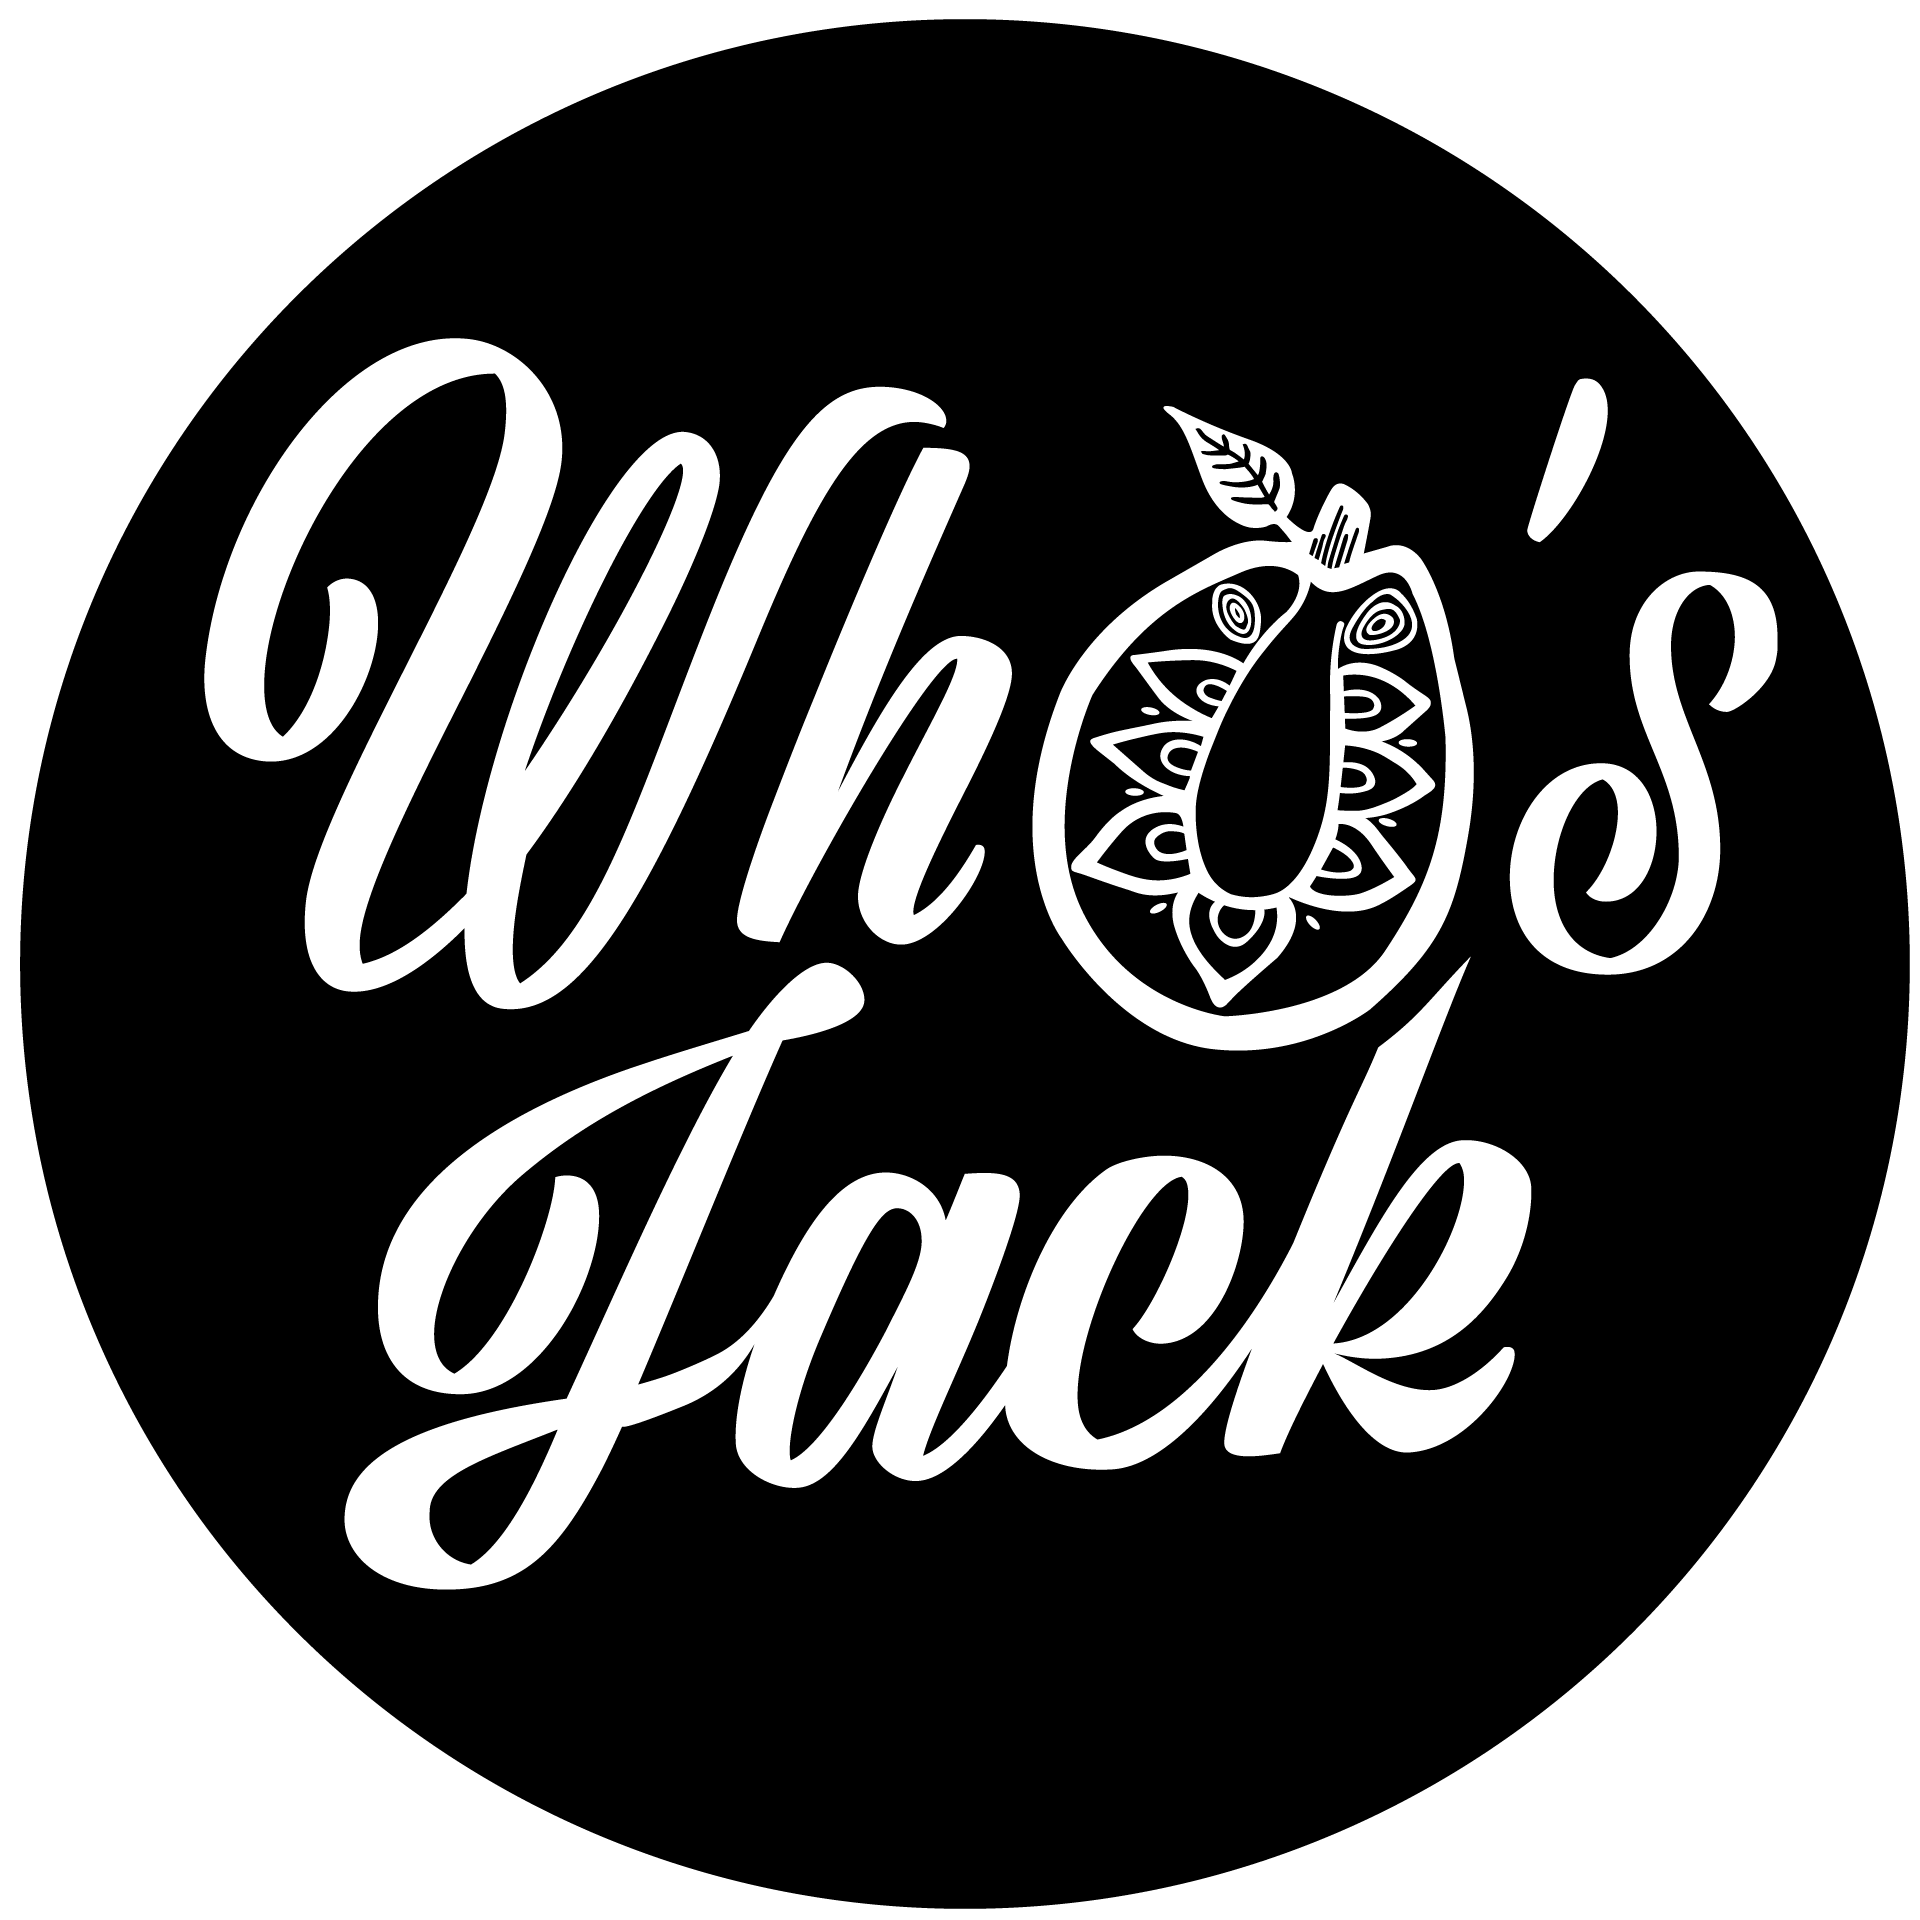 WHO'S JACK